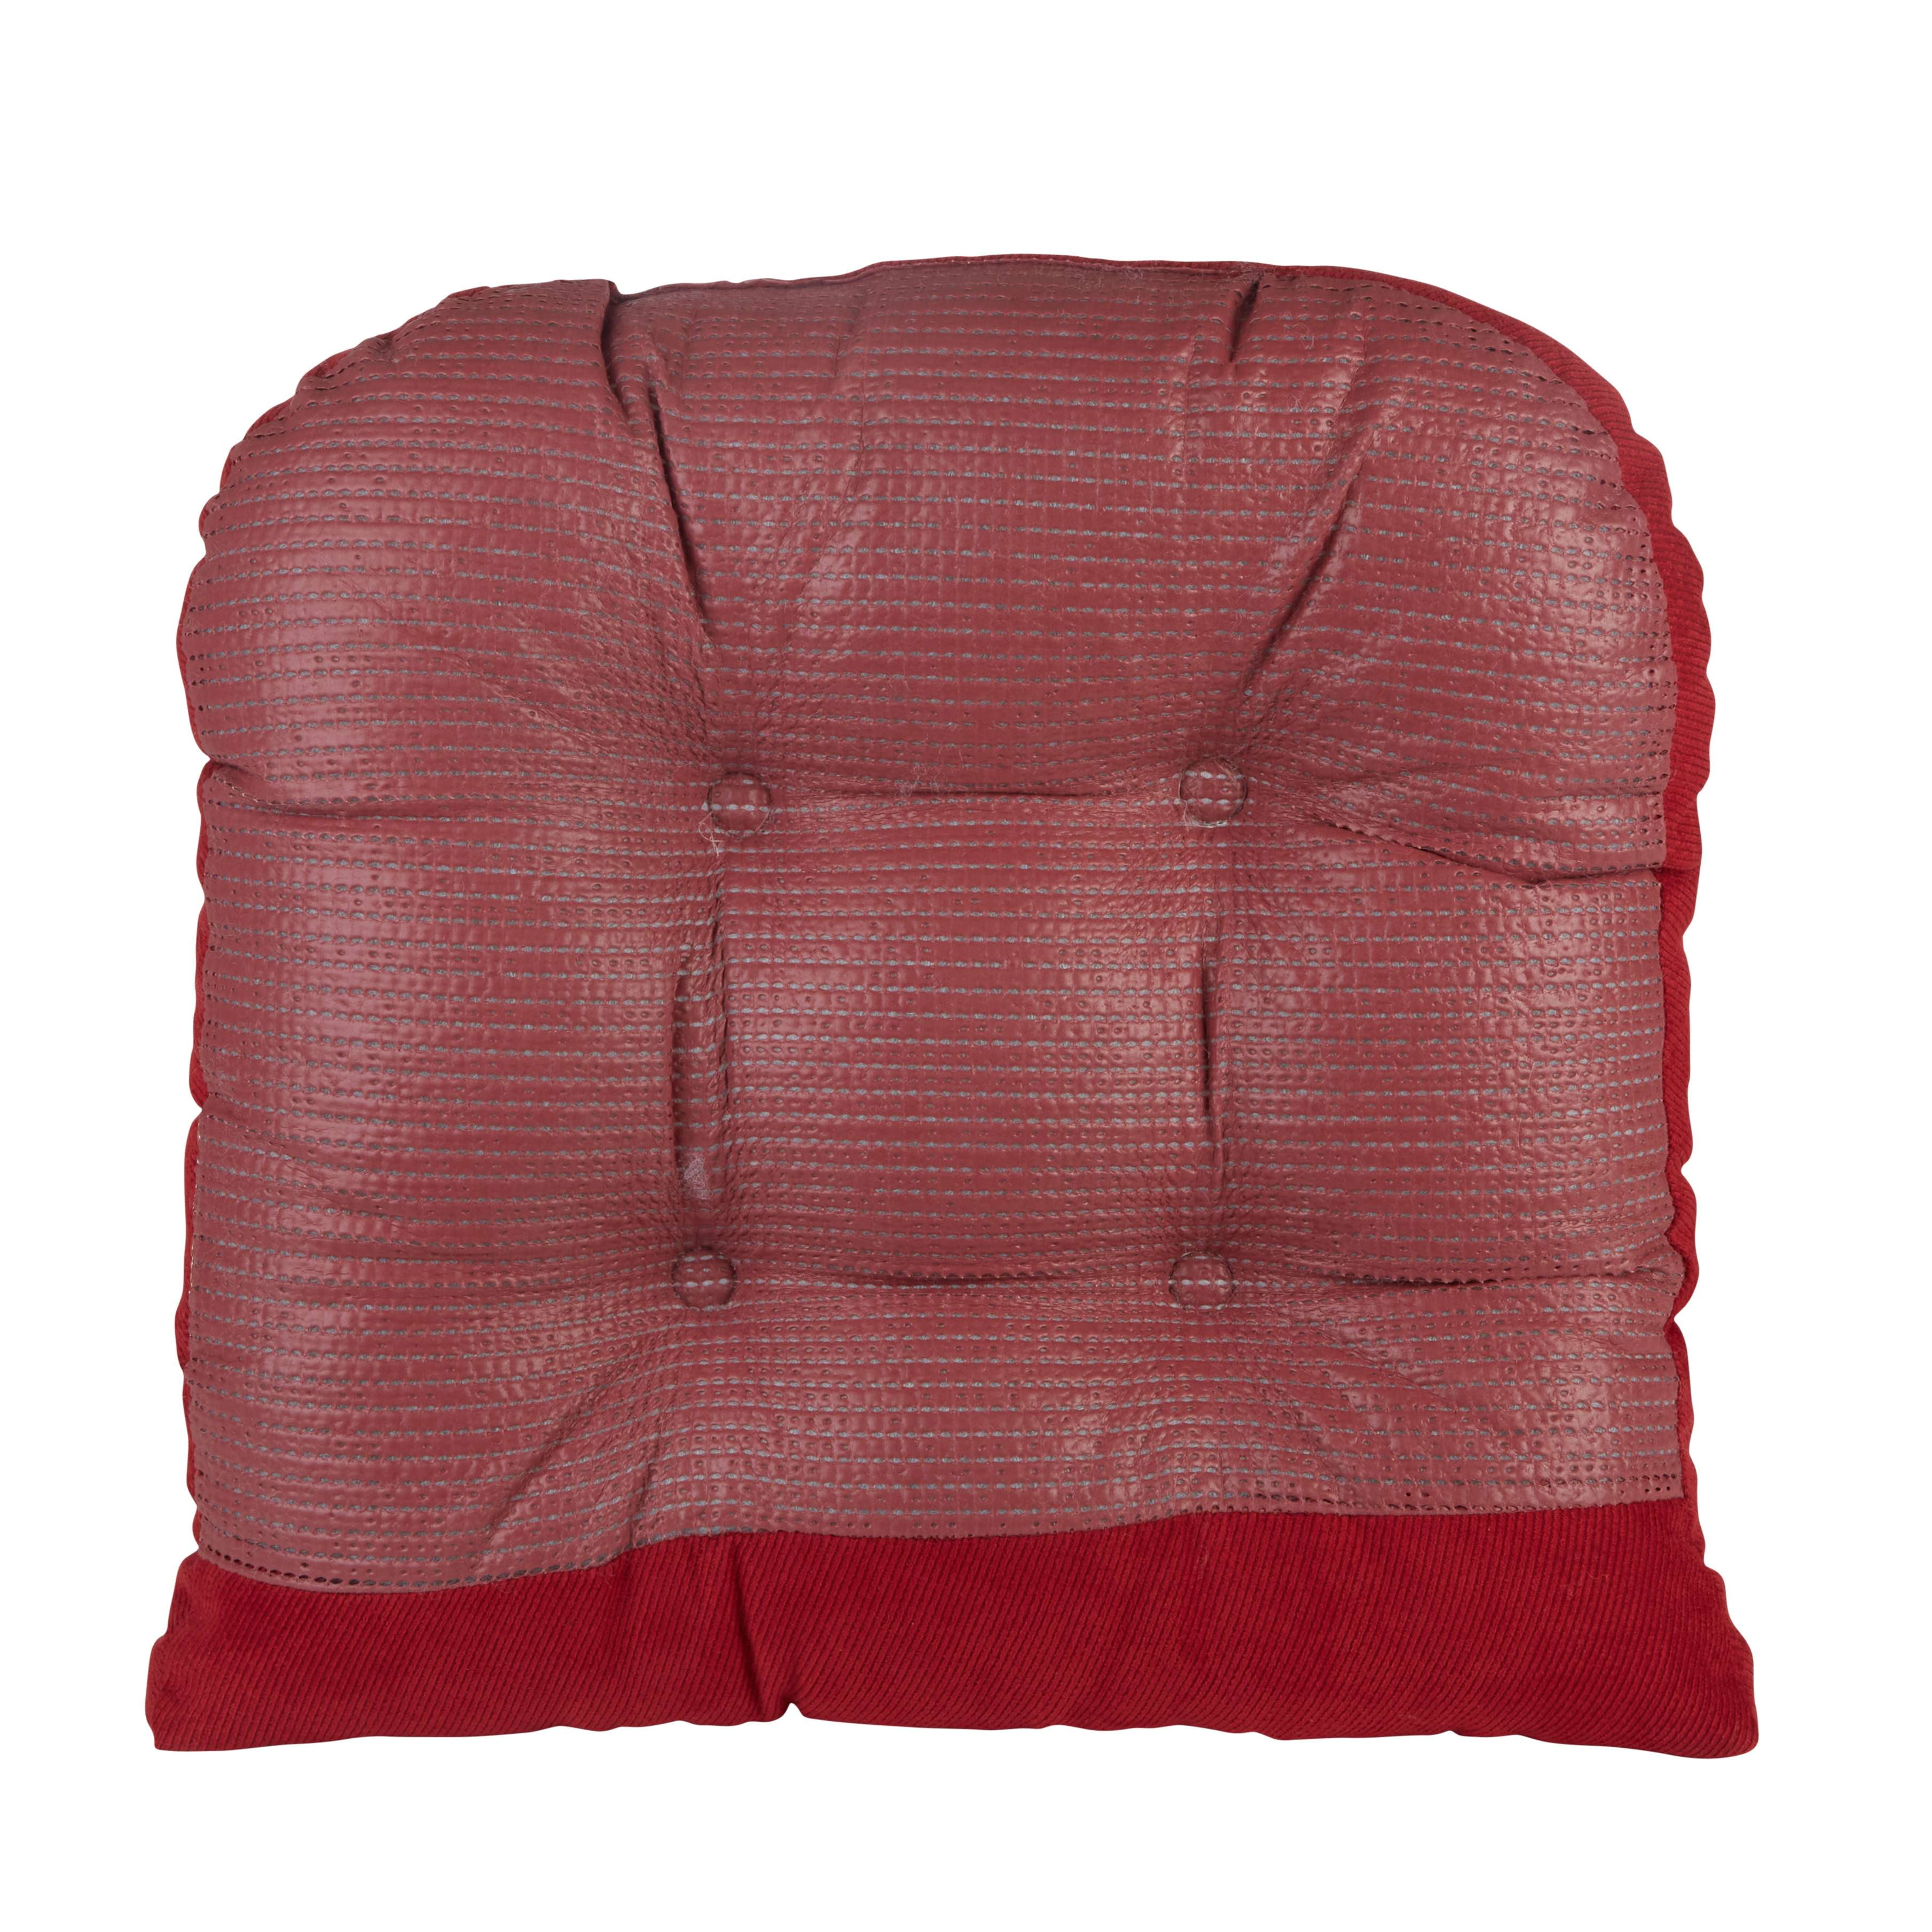 Master Memory Foam Seat Cushion 17 H x 17 12 W x 2 34 D Black